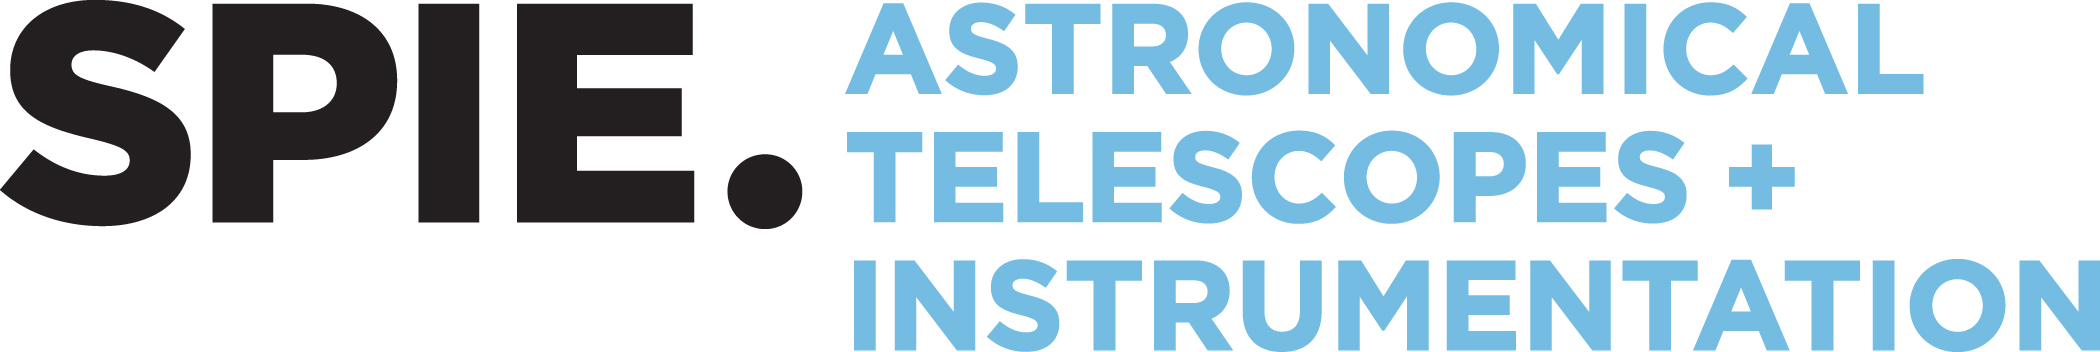 SPIE Astronomical Telescopes + Instrumentation 2020